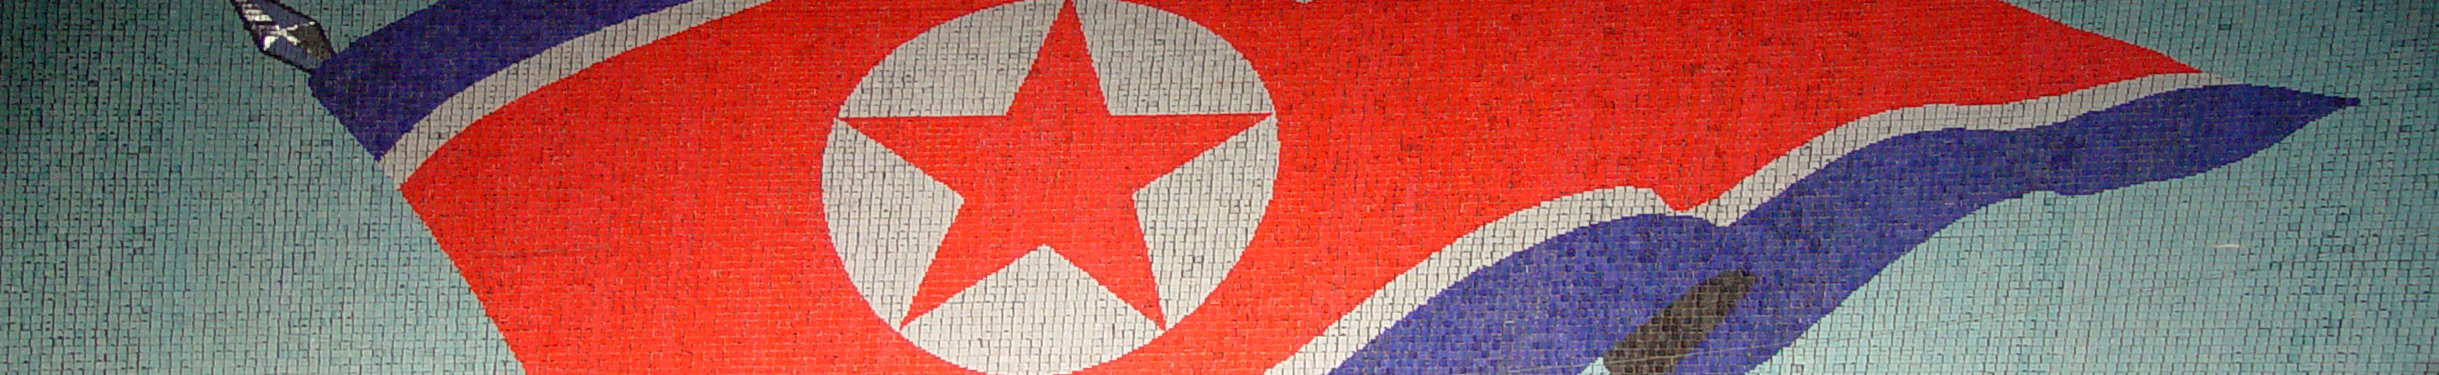 North Korea Tech - 노스코리아테크